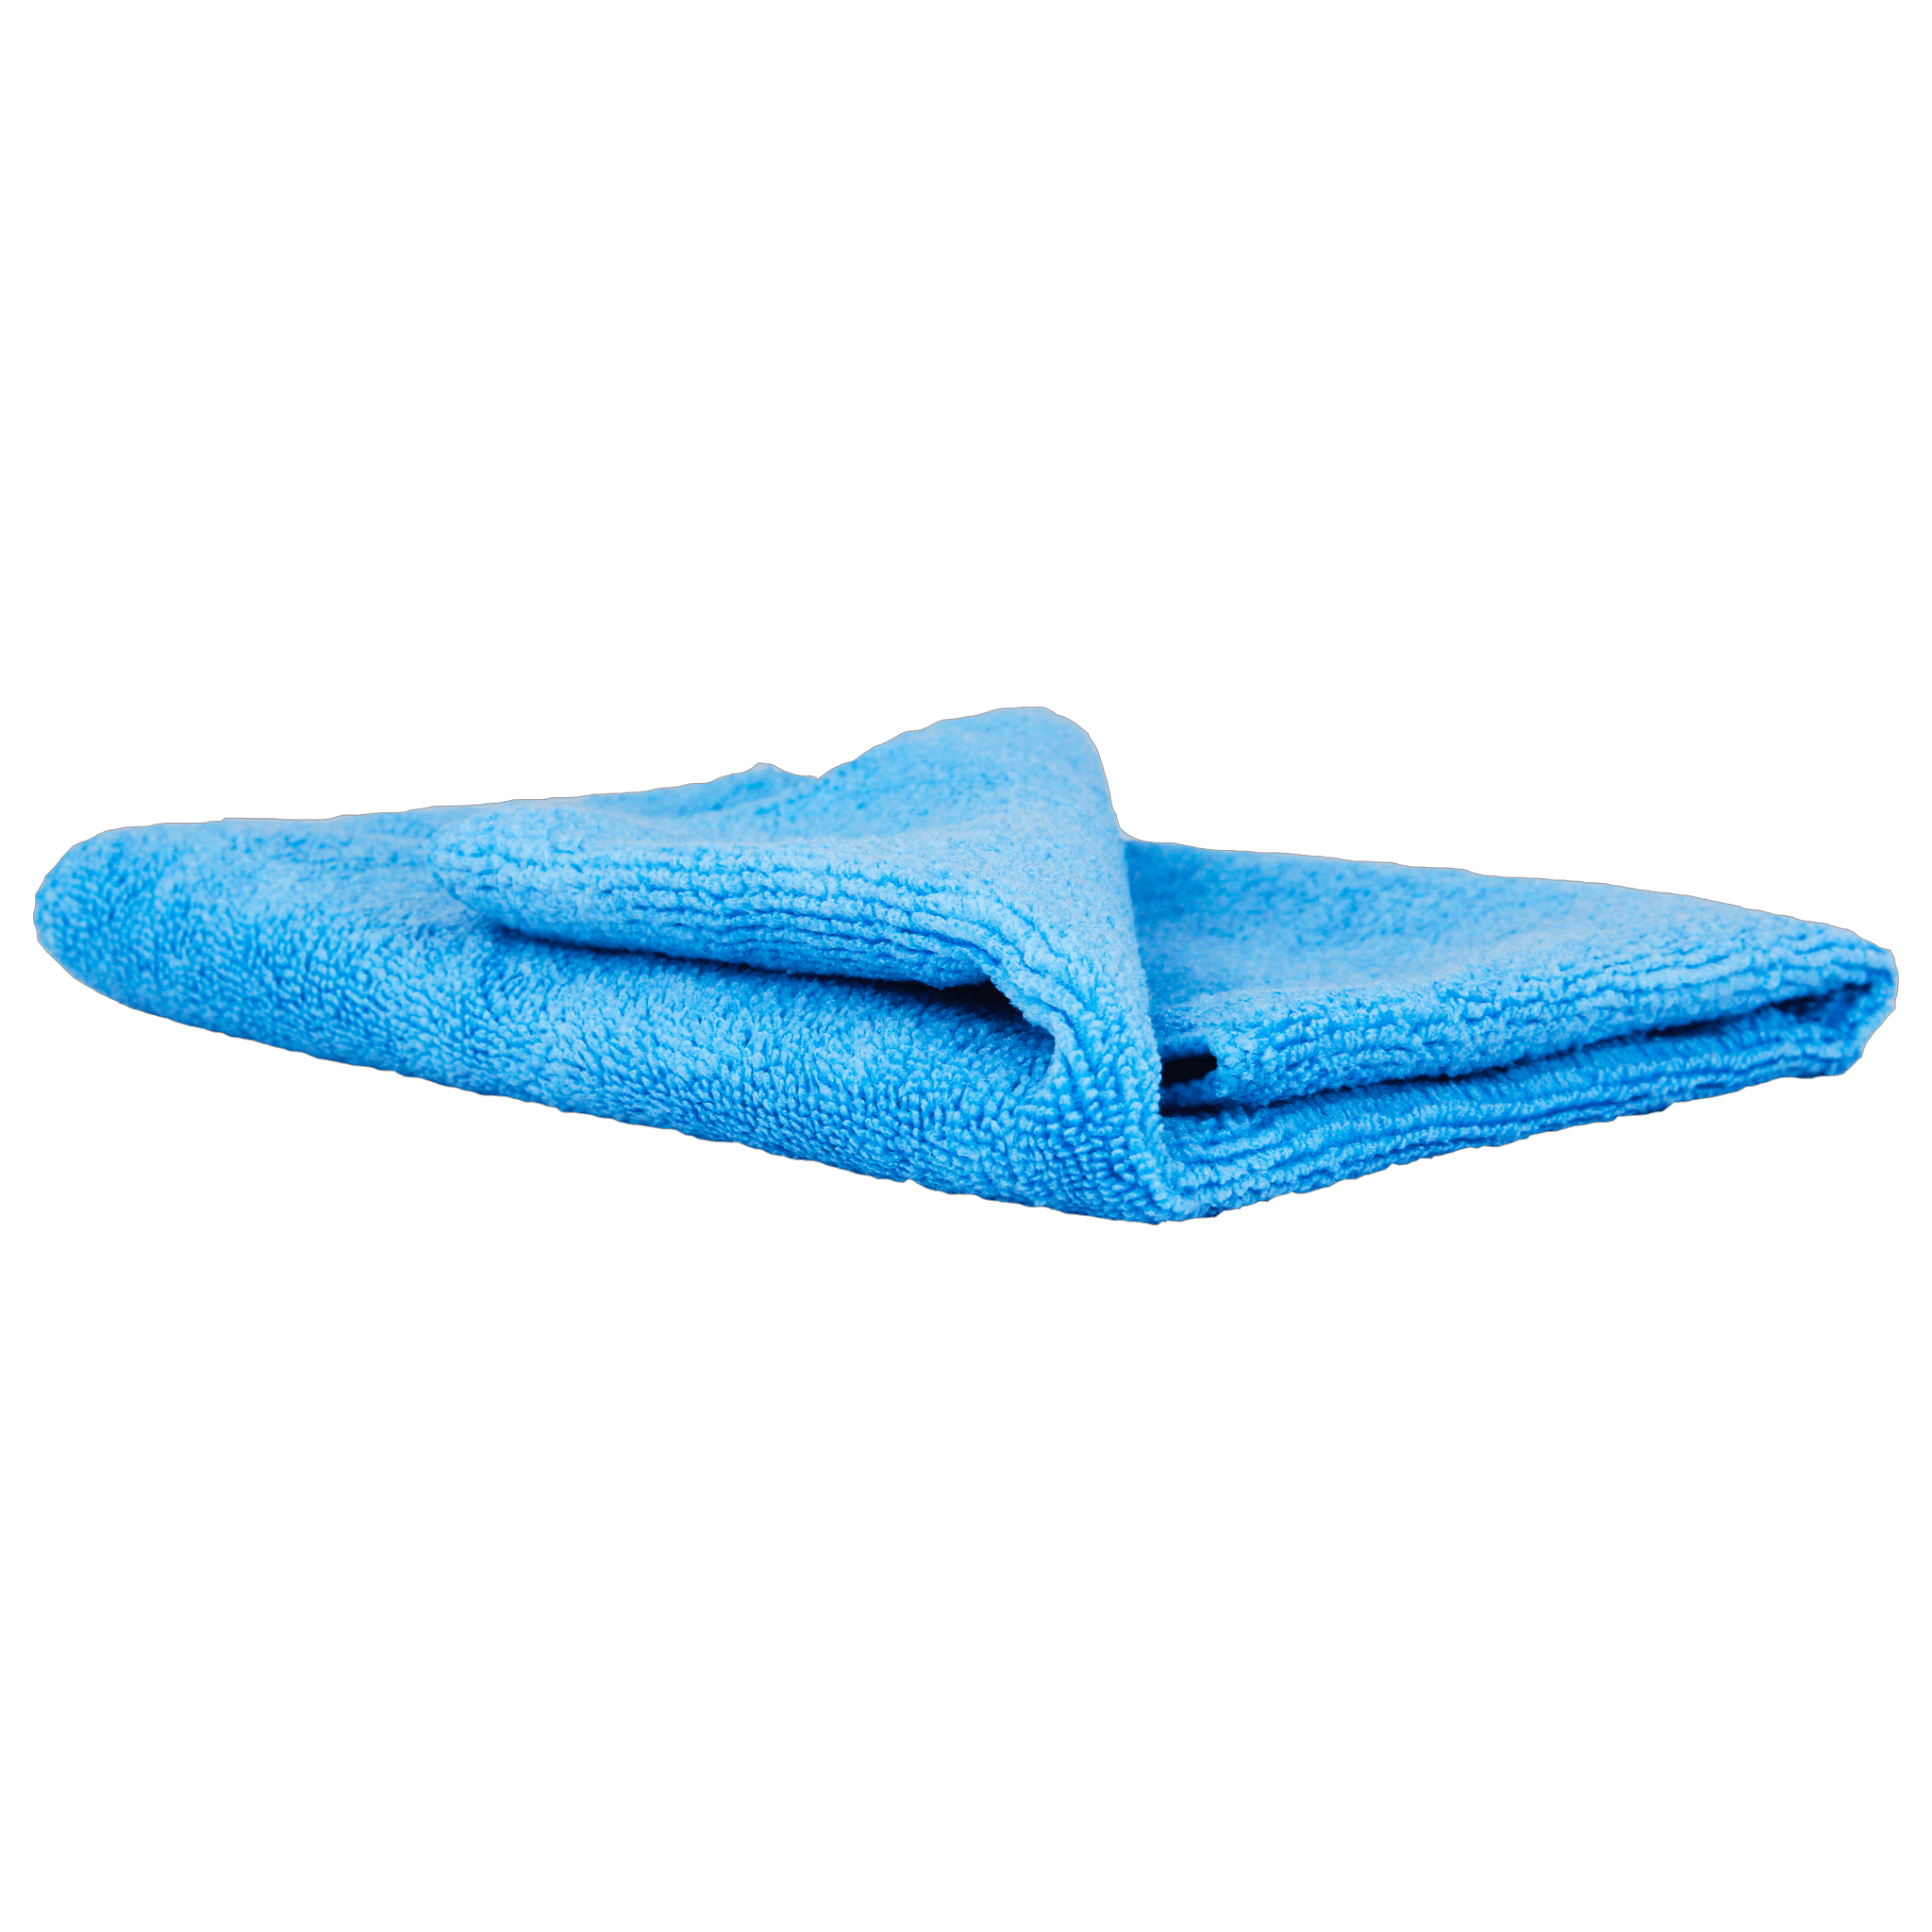 Standard Pro MicroFiber Towels